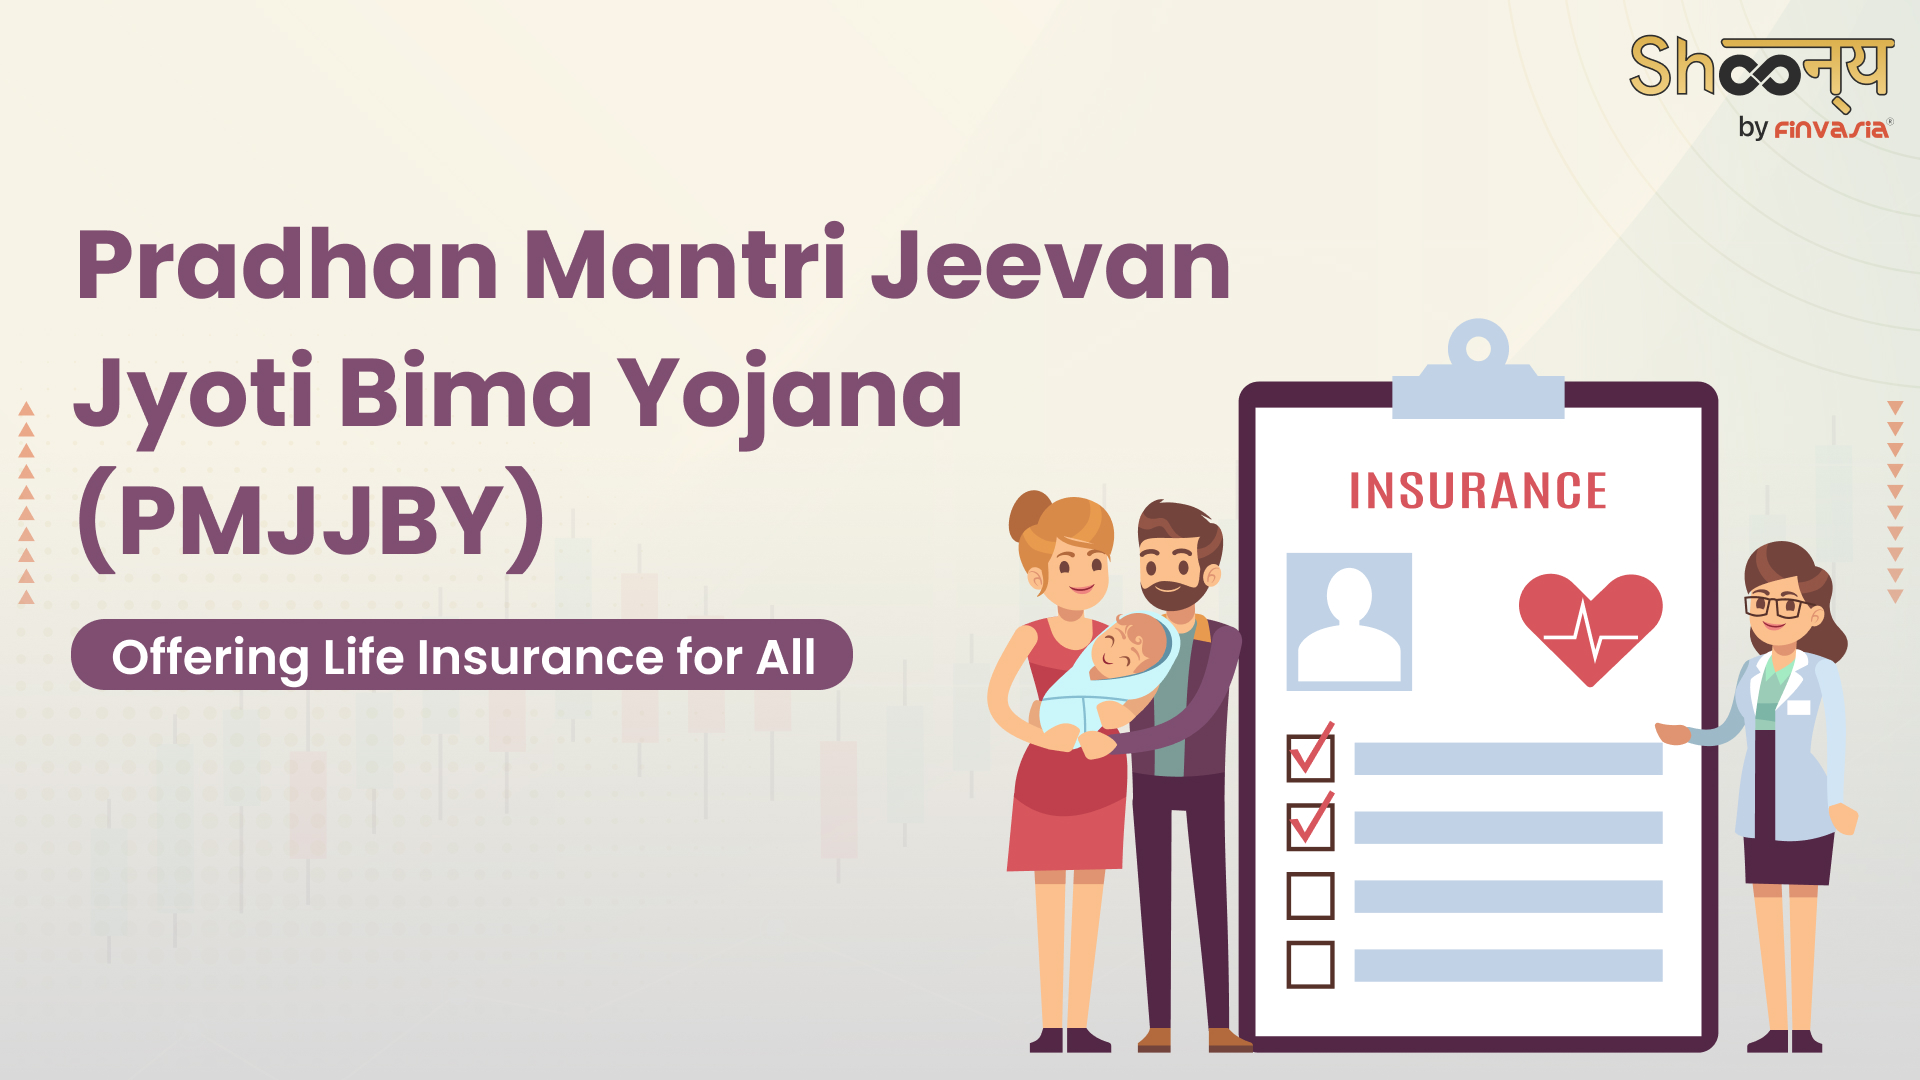 Benefits of Pradhan Mantri Jeevan Jyoti Bima Yojana (PMJJBY)